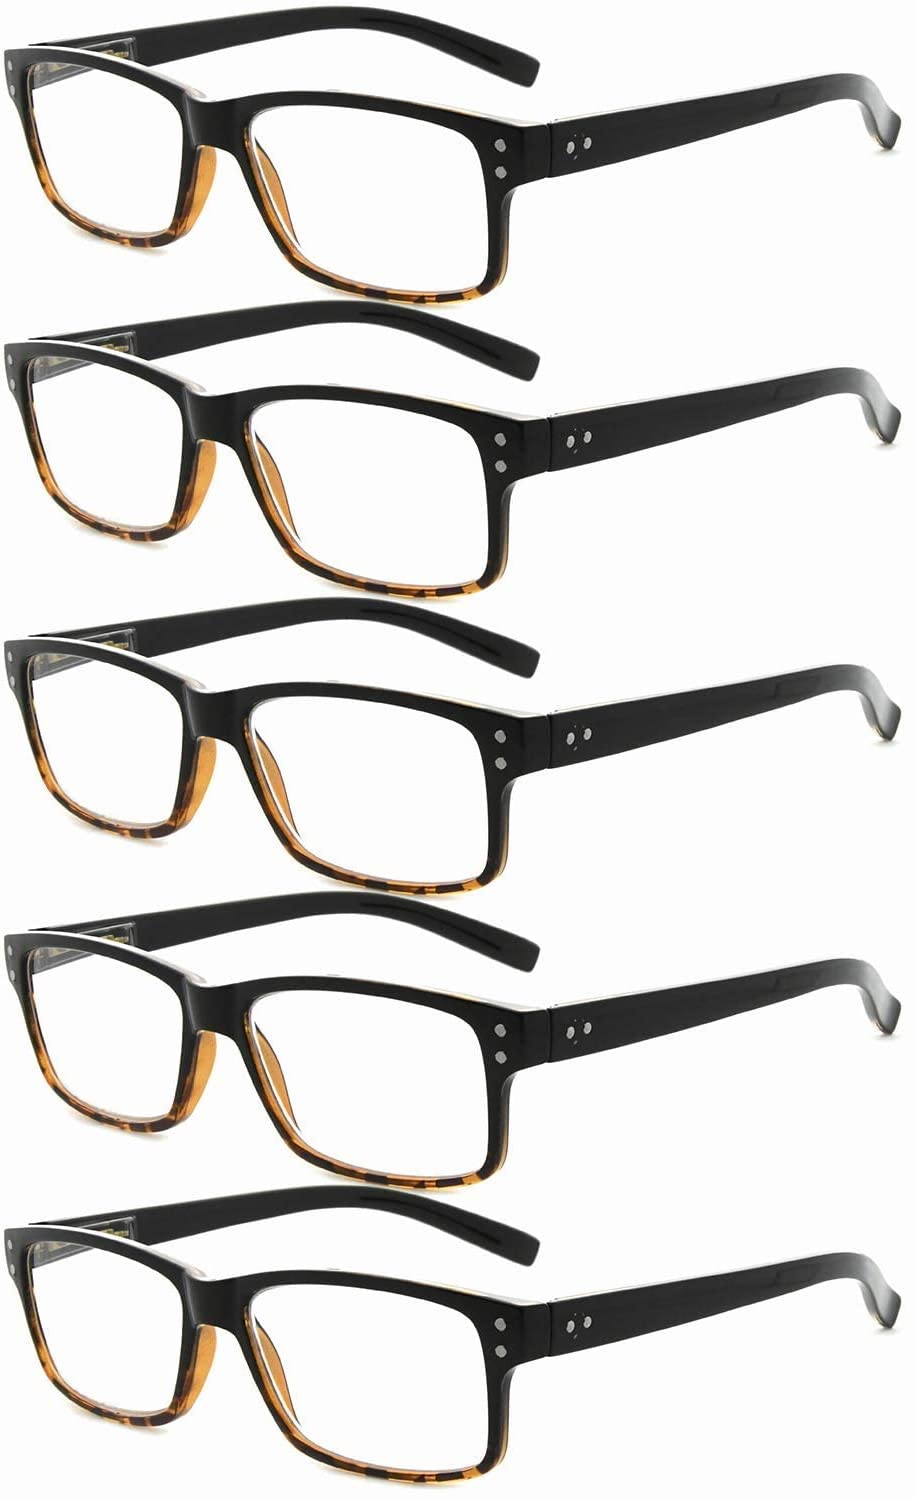 Eyekepper vindimia Flex ligero plastico marco amarillo tenido lentes computadora gafas lectores ojogafas negro 2.5 